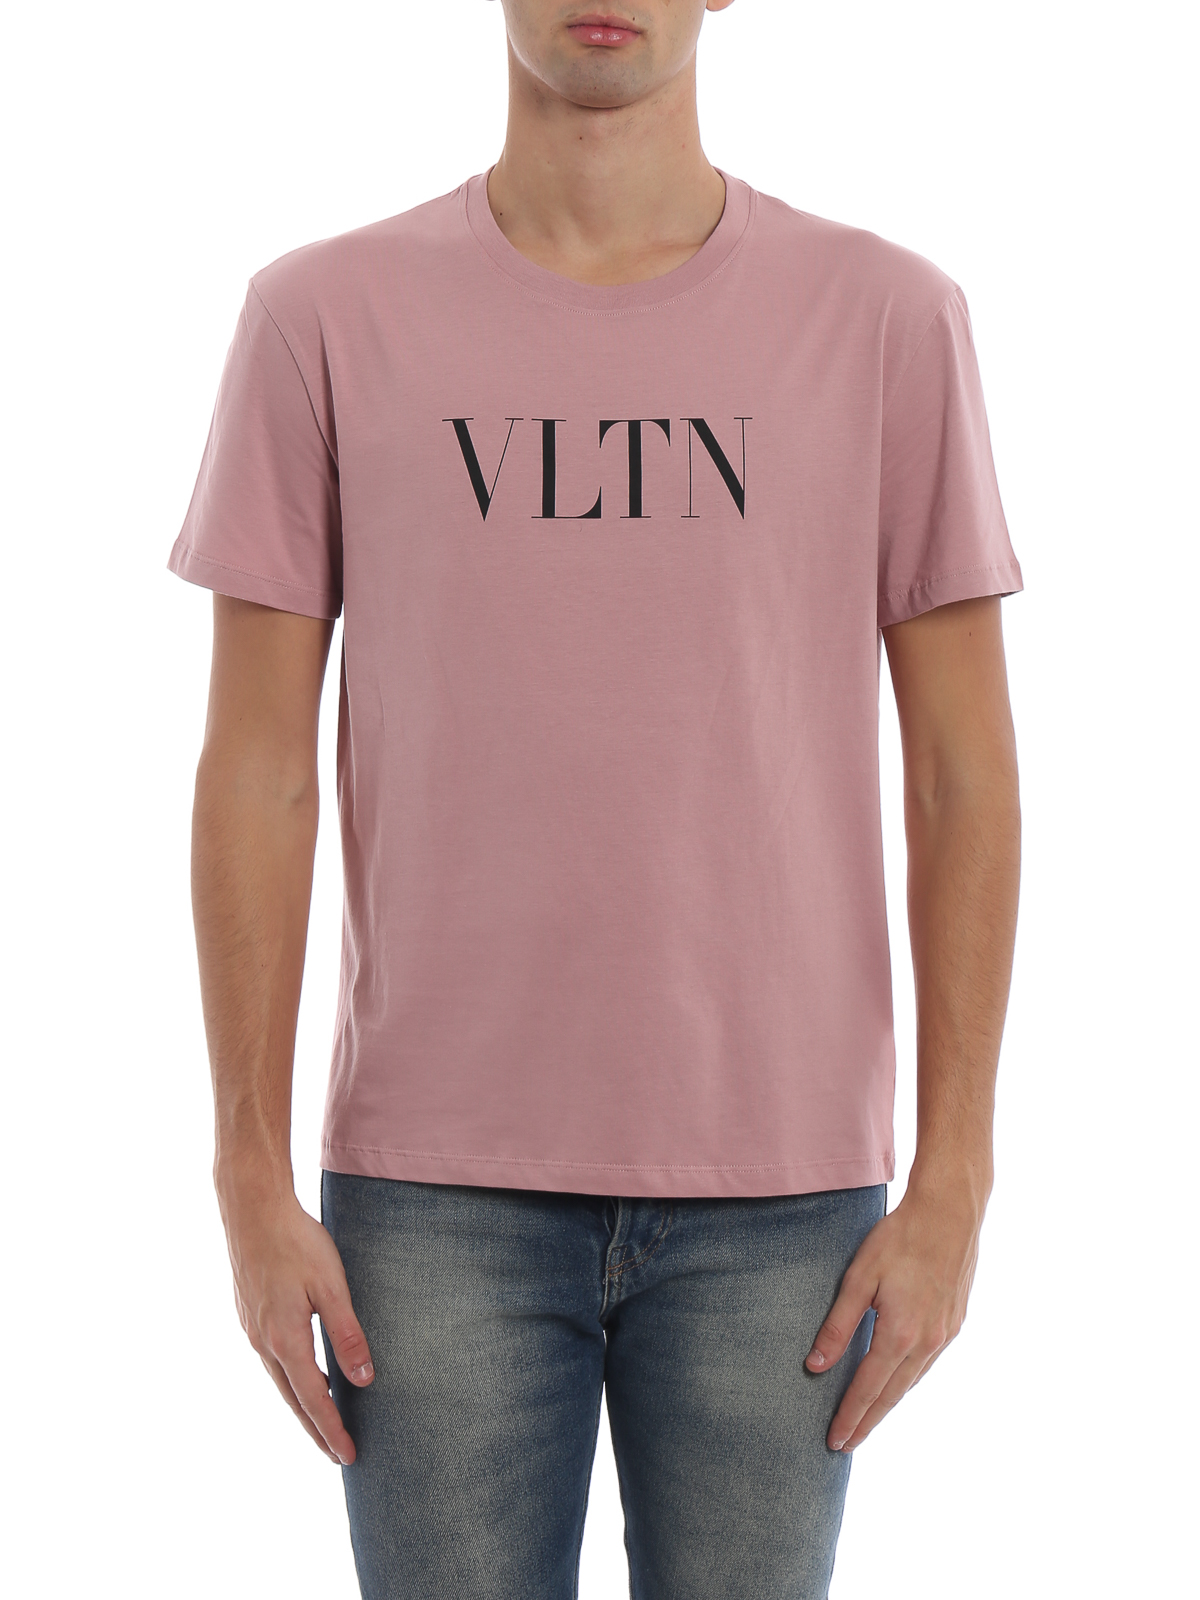 Tシャツ Valentino - Tシャツ - Vltn - RV3MG10V3LE517 | iKRIX.com